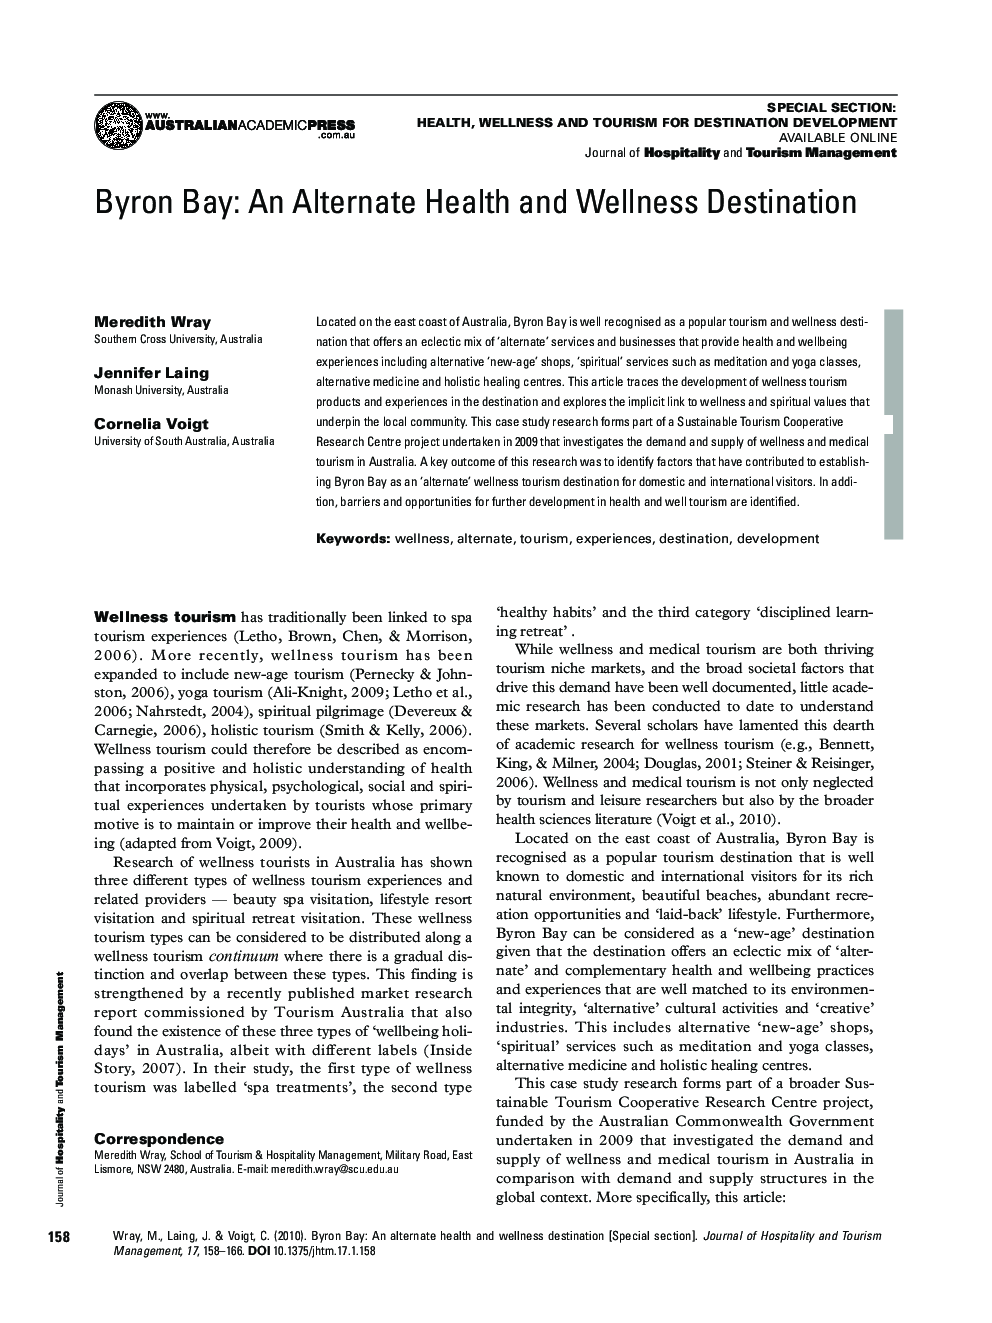 Byron Bay: An Alternate Health and Wellness Destination